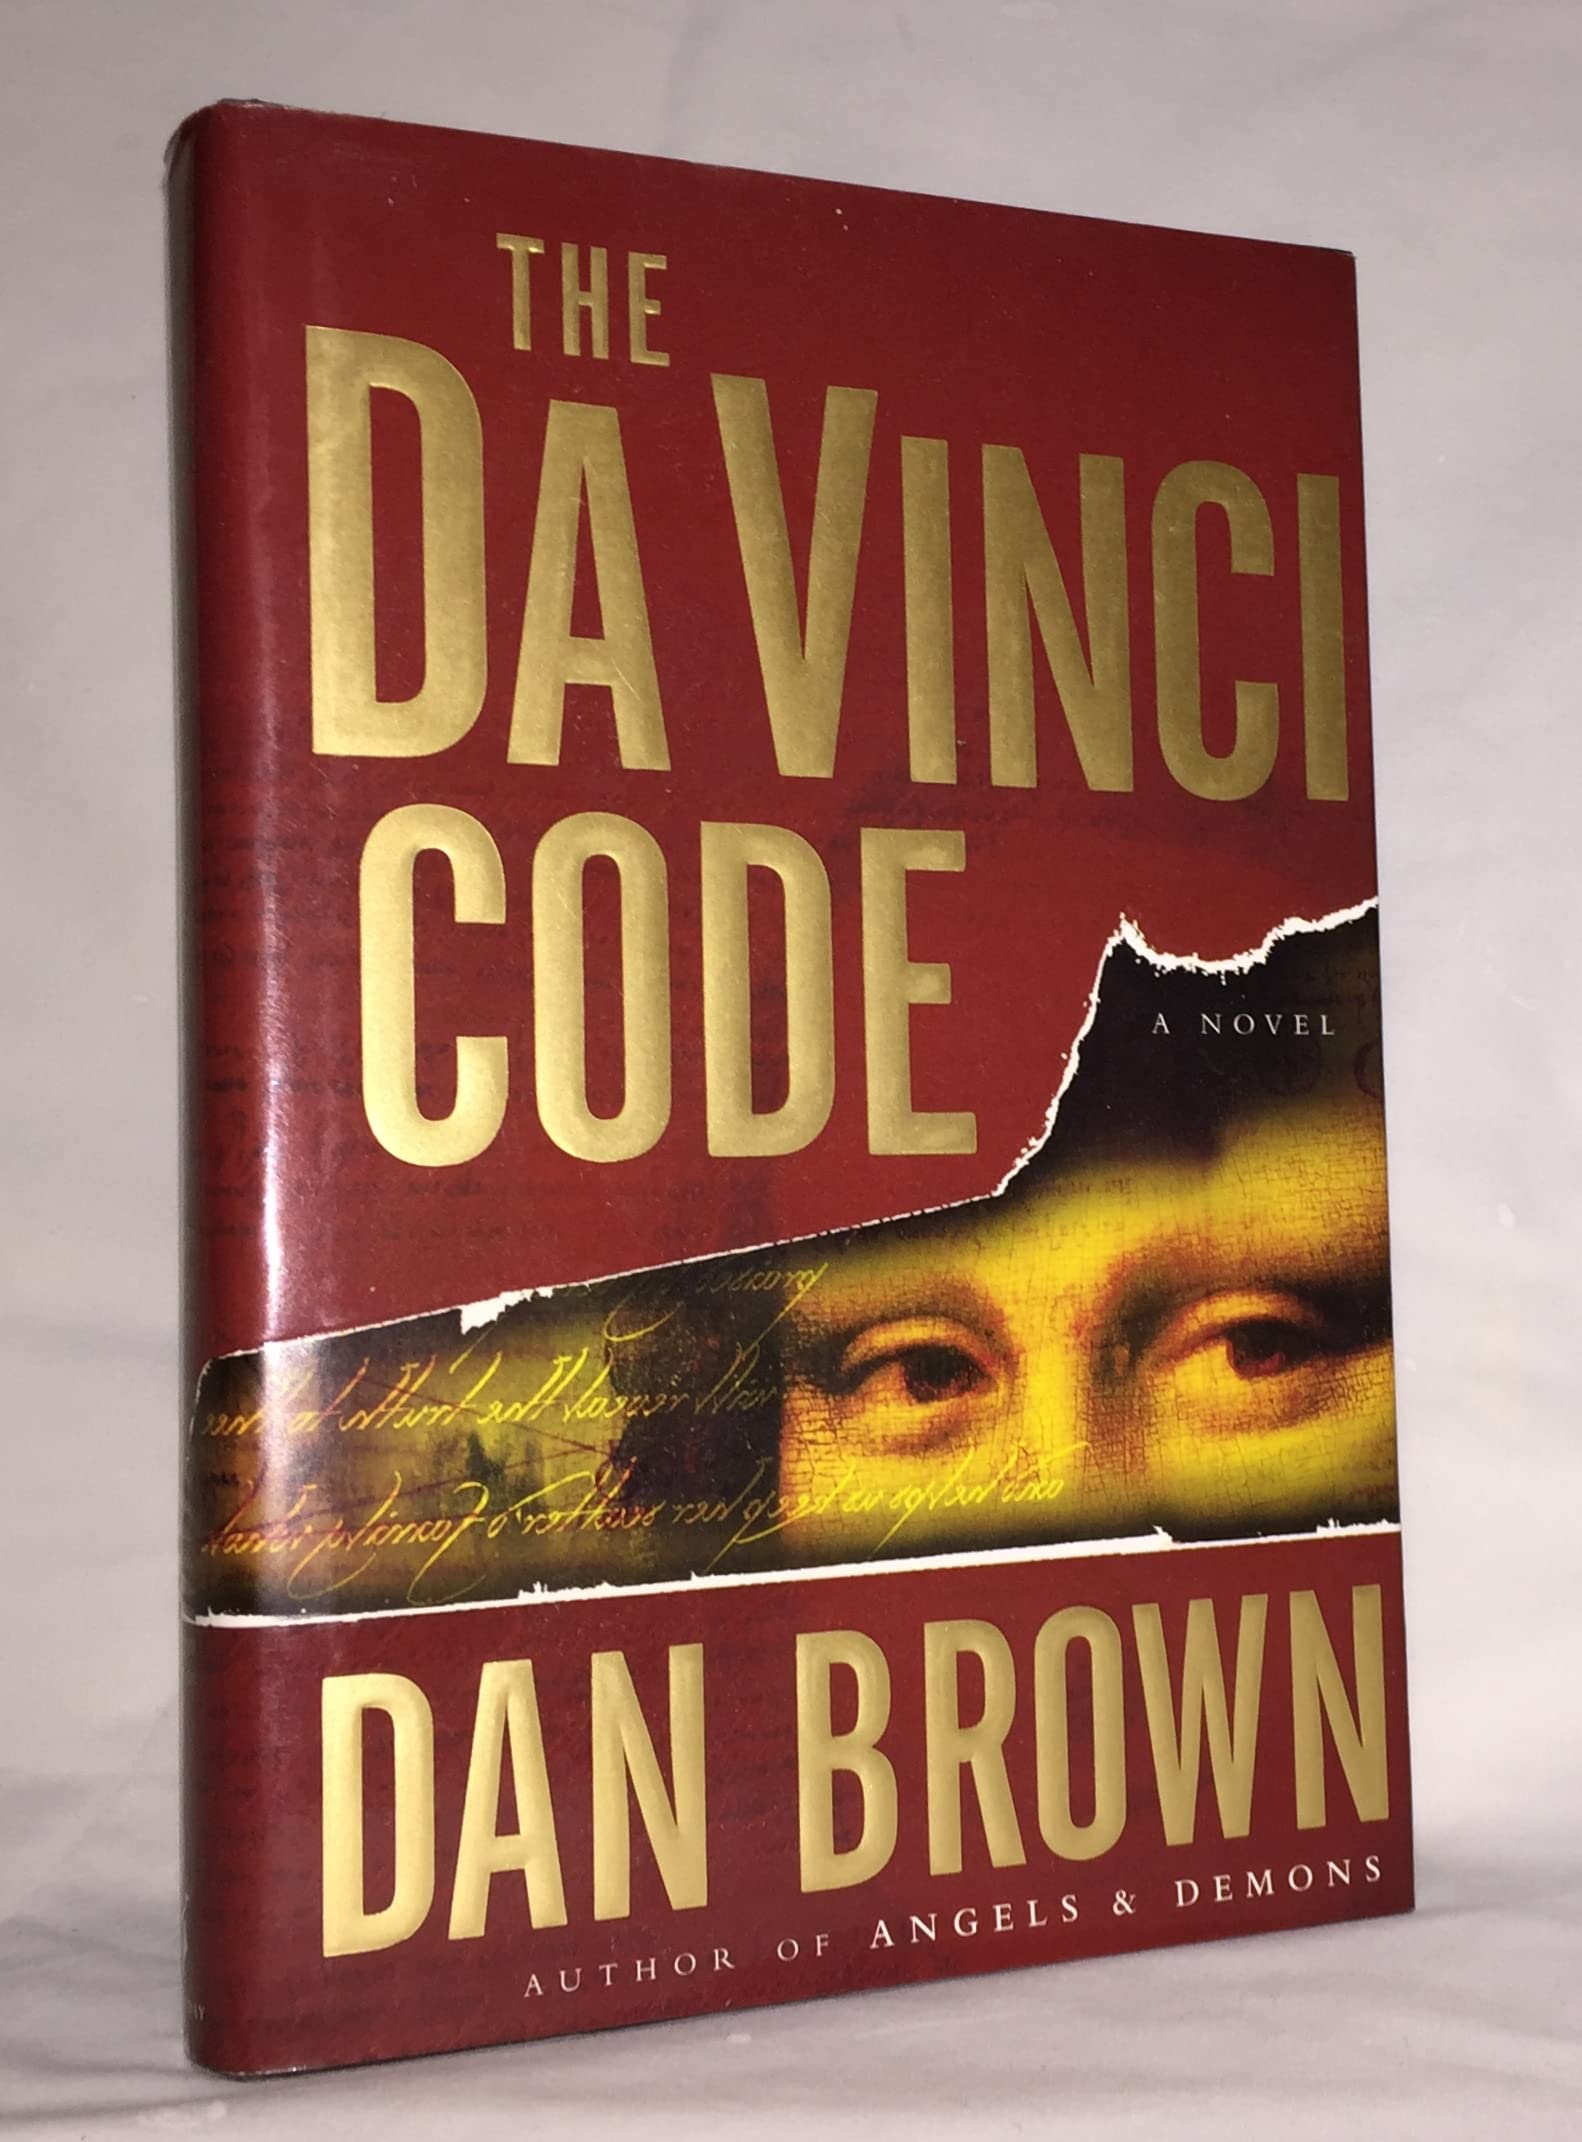 Davinci Code by Dan brown 